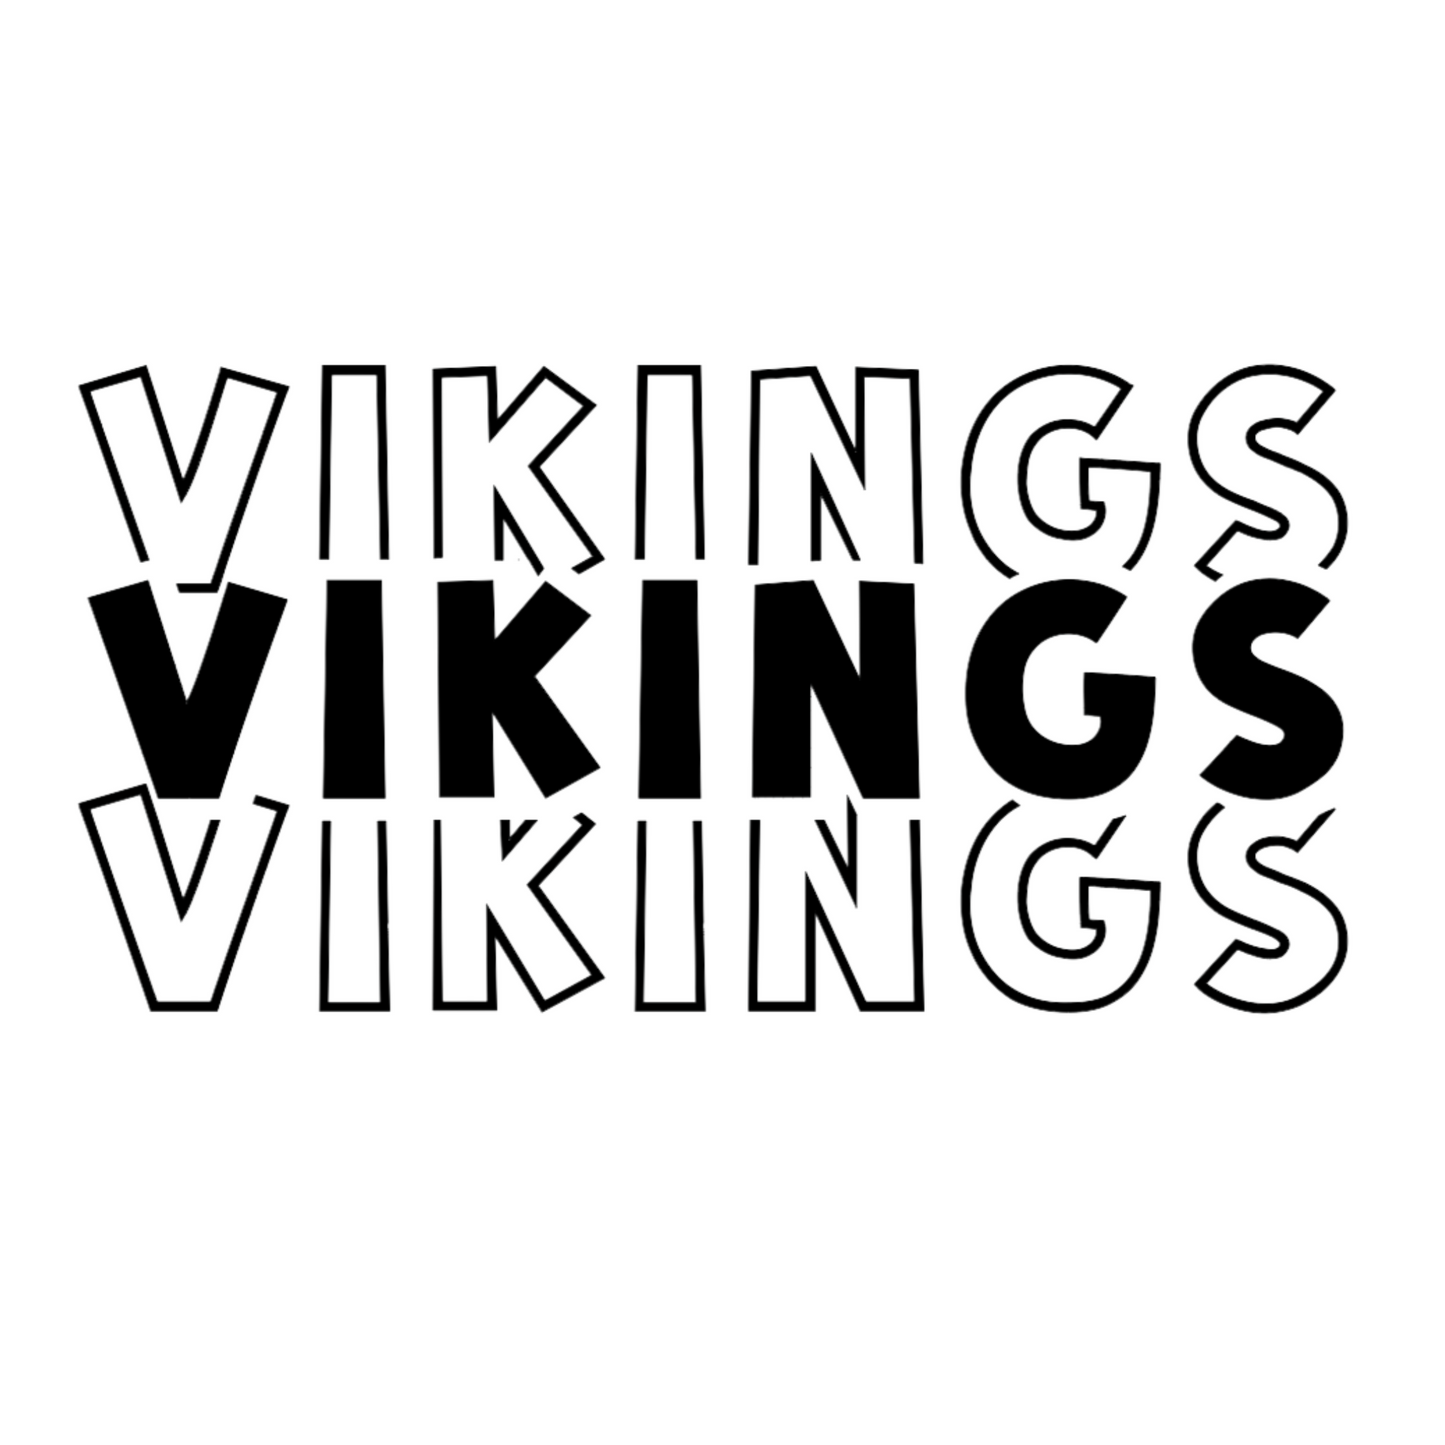 Minnesota Vikings - T-Shirt design (black writing) on a white background.